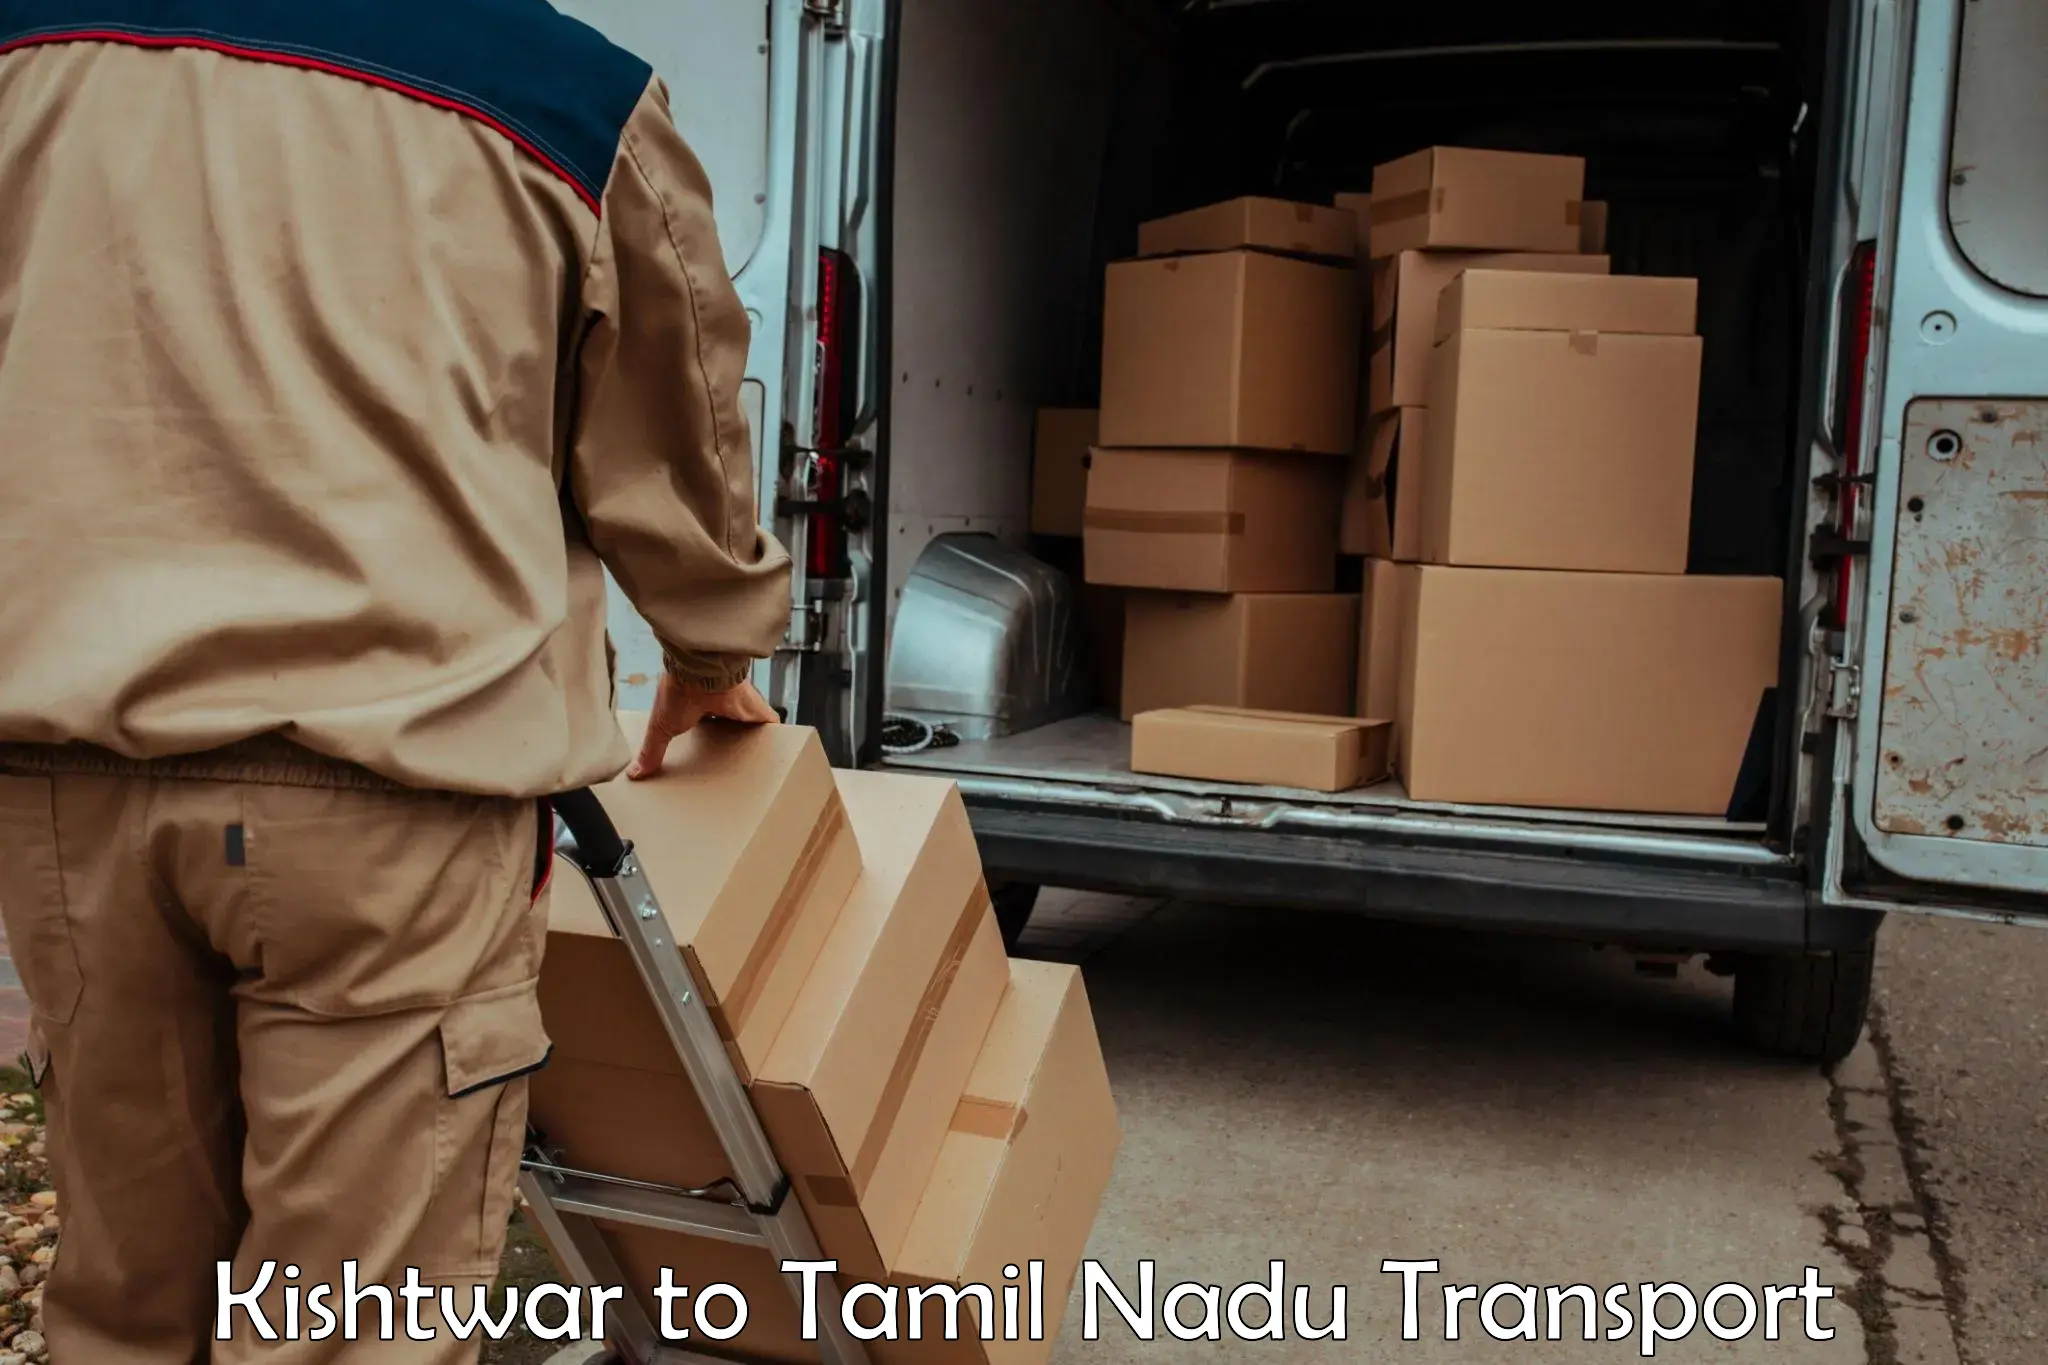 Goods delivery service Kishtwar to Tiruchengode